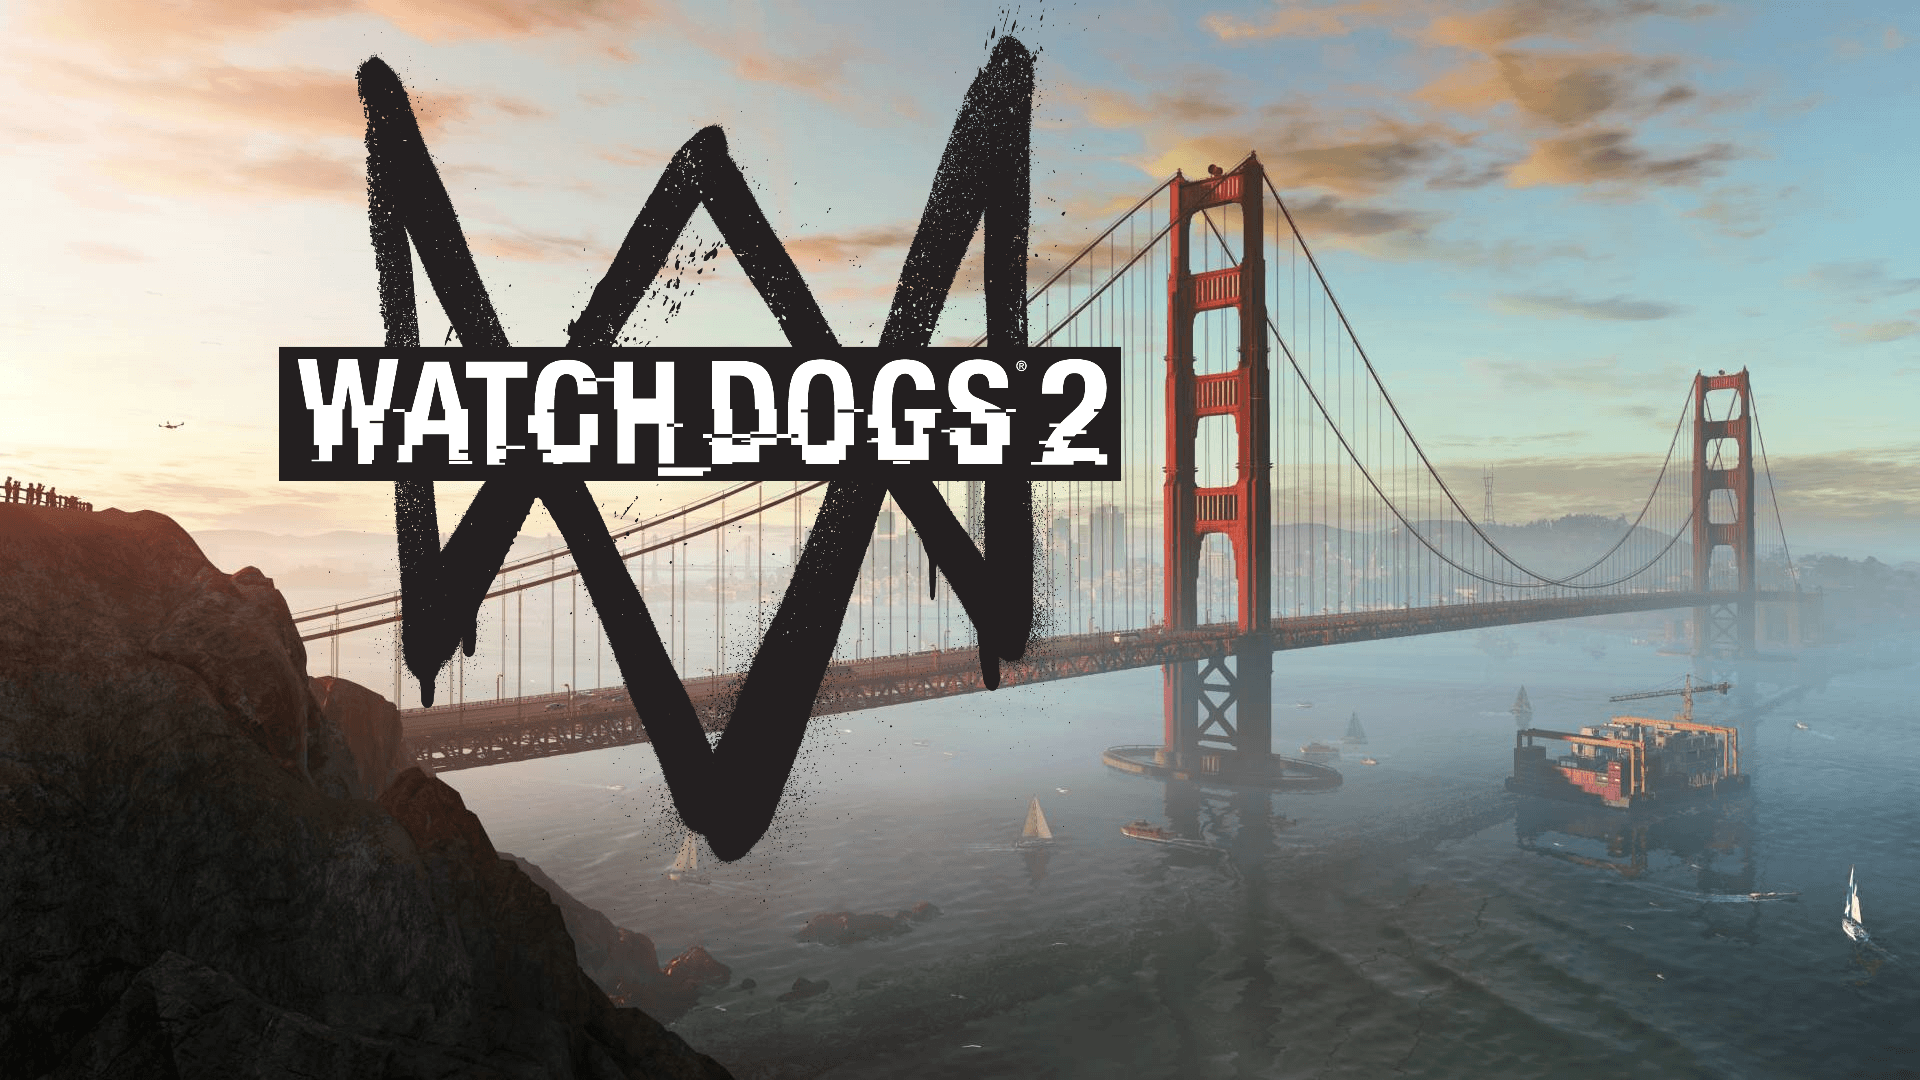 Watch Dogs 2 Game Desktop Wallpaper 62007 1920x1080px